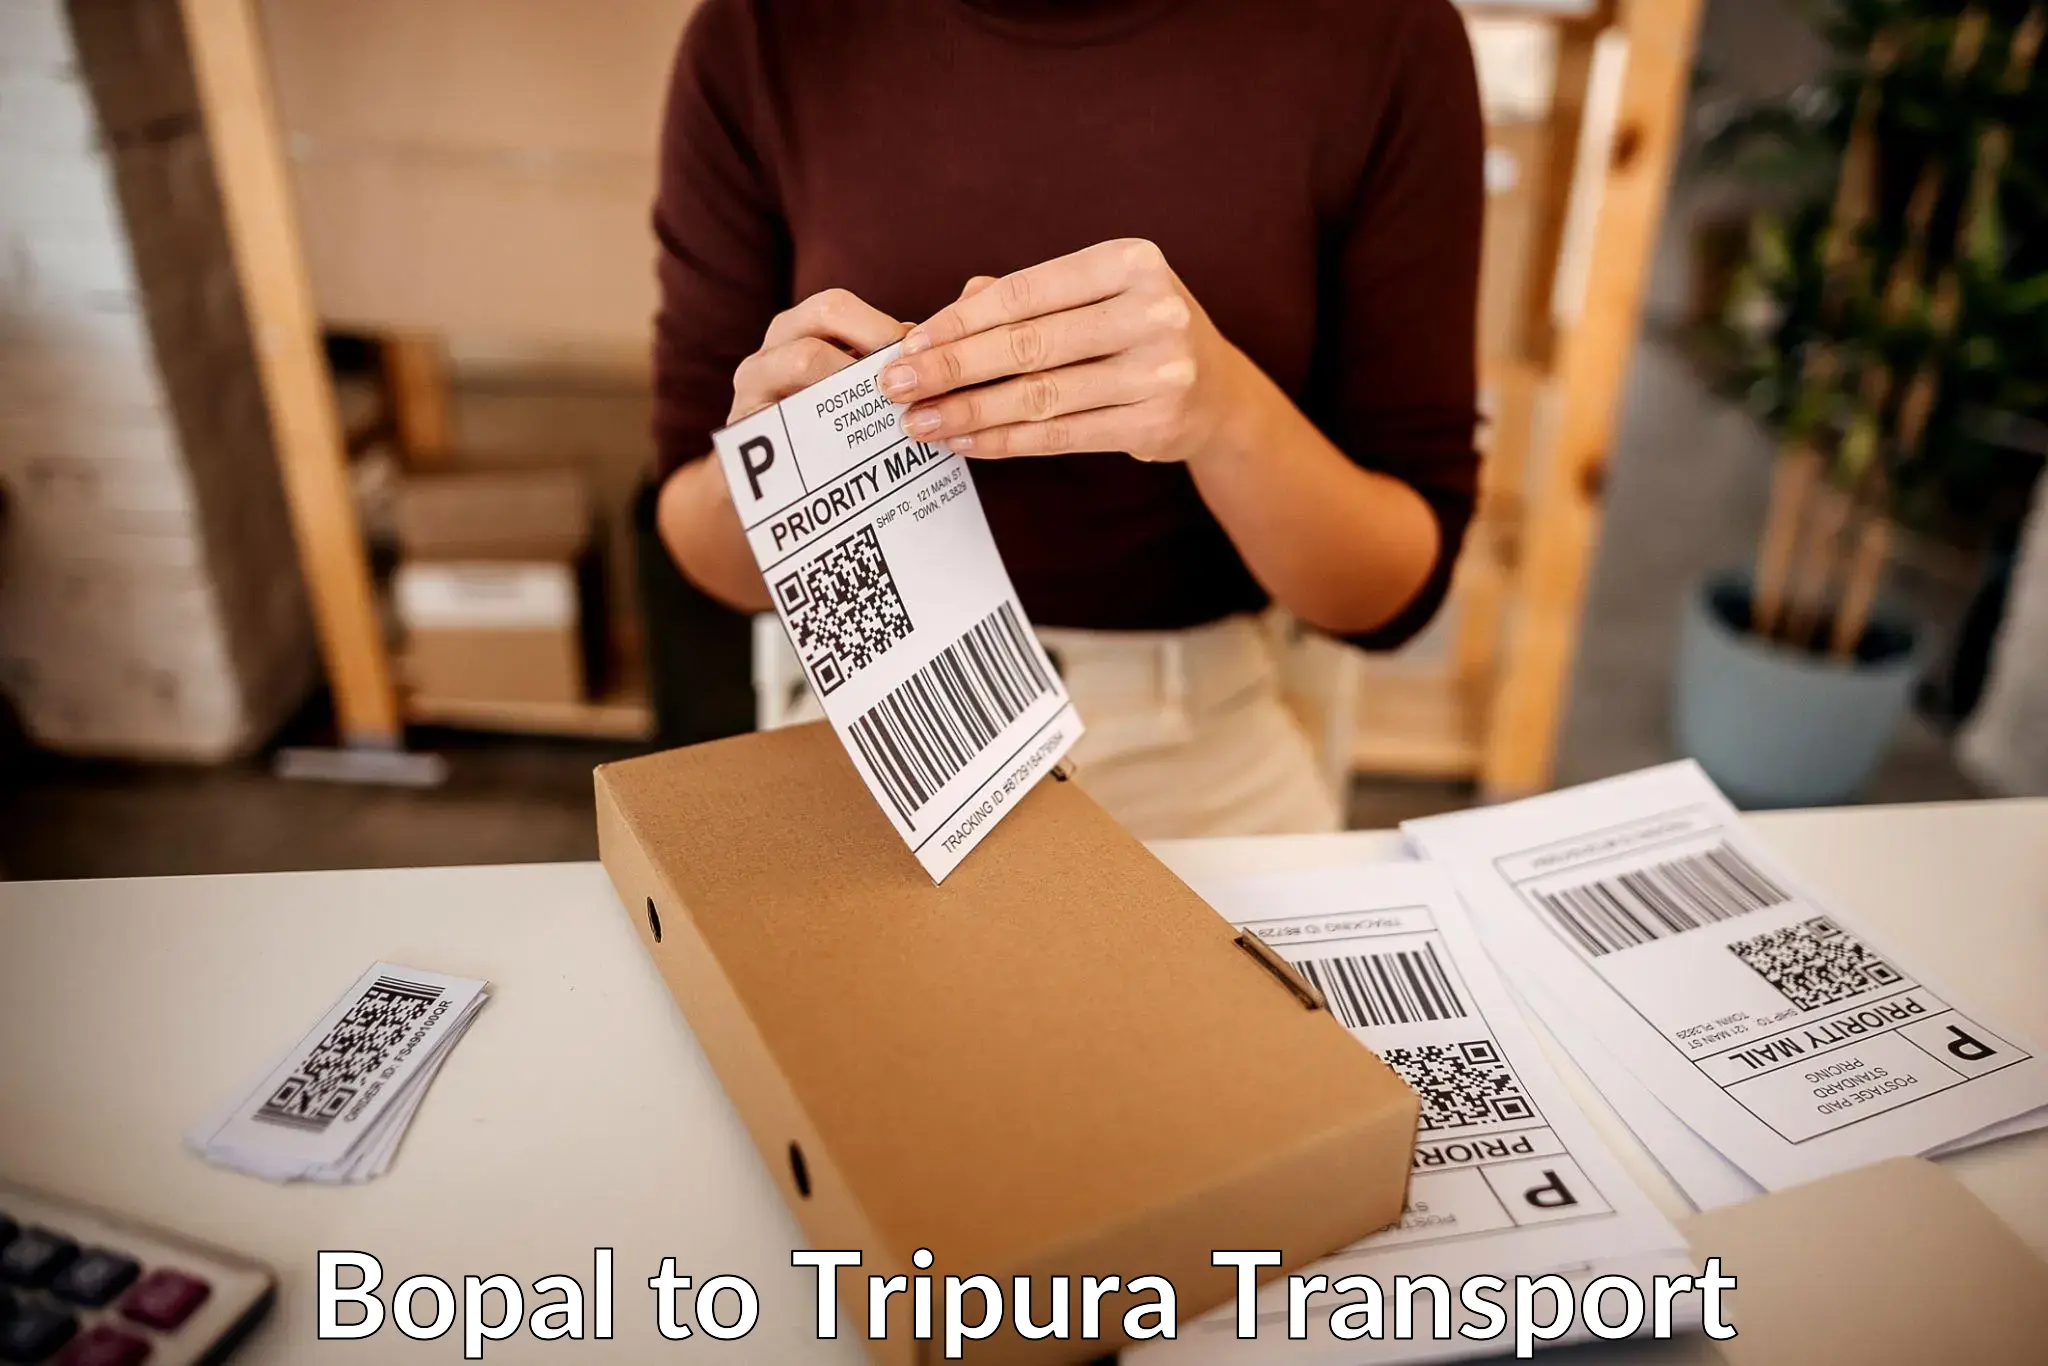 Transport in sharing Bopal to Tripura